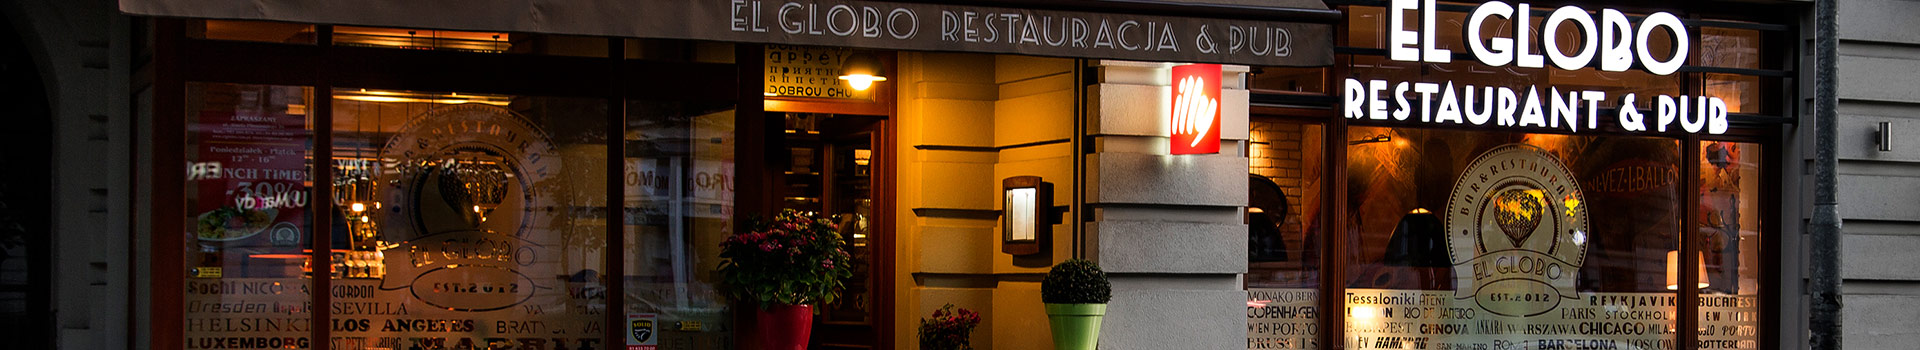 El Globo Pub&Restaurant